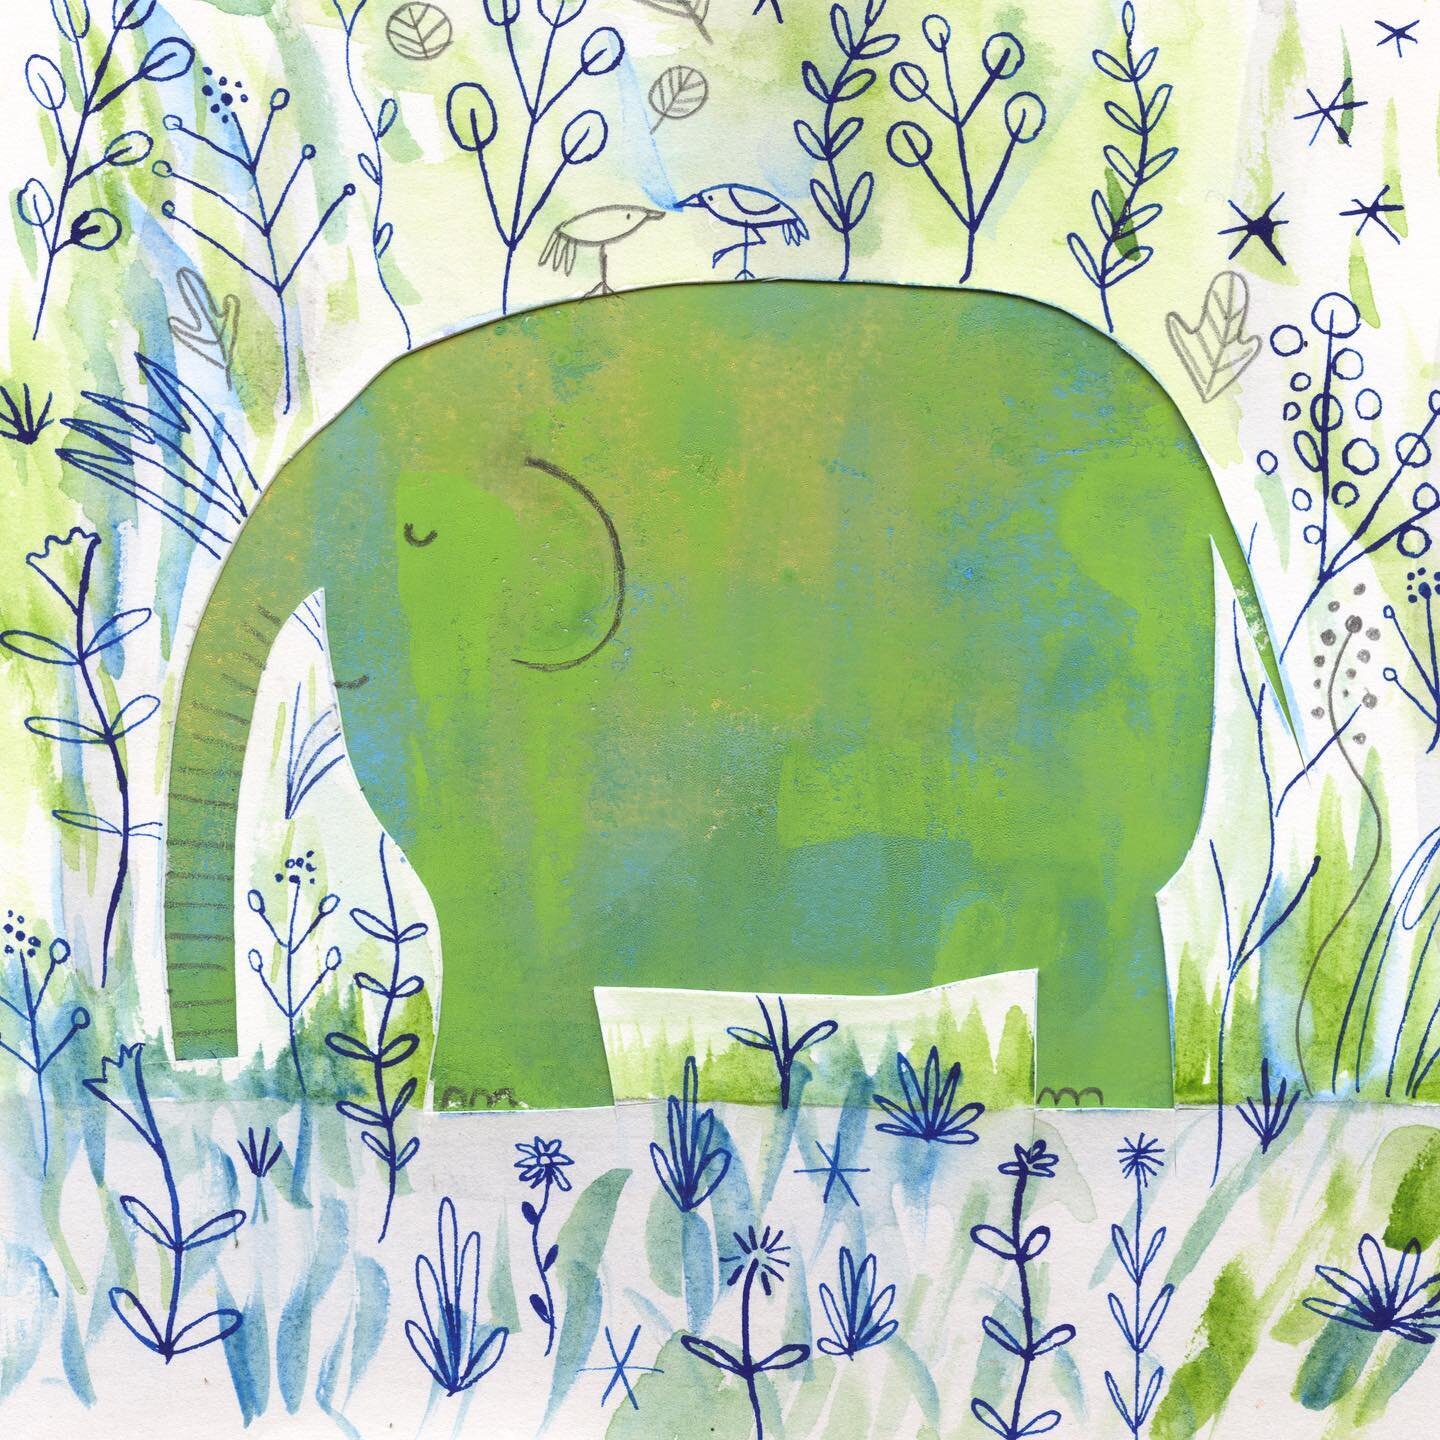 Tiny elephant friend. 

#watercolor #inkdrawing #ink #gouache #gouchepainting #elephant #elephantart #sketchbook